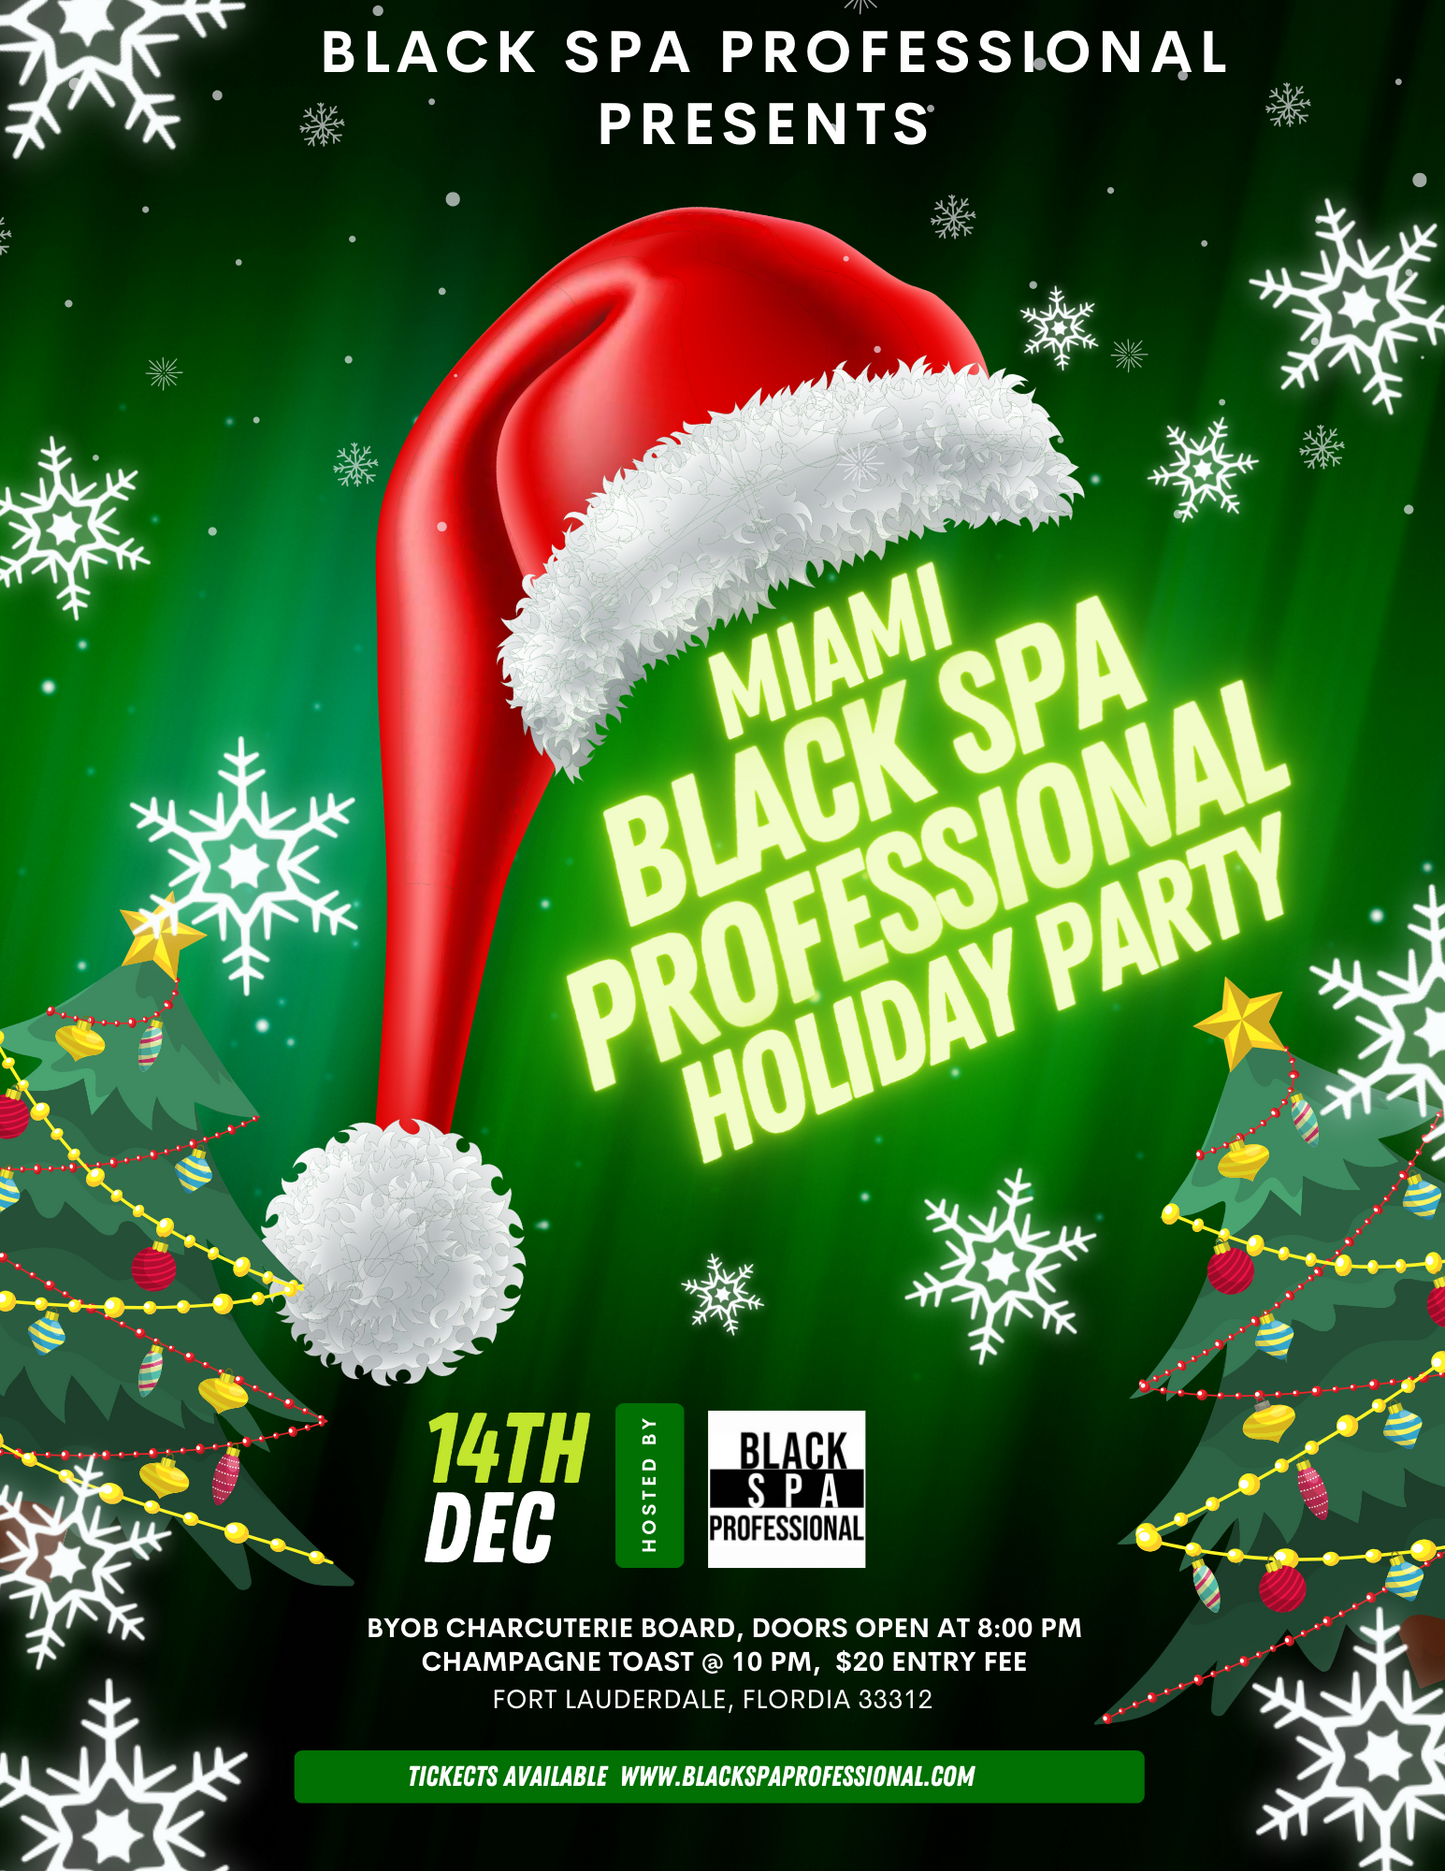 Miami Black Spa Professional Holiday Party